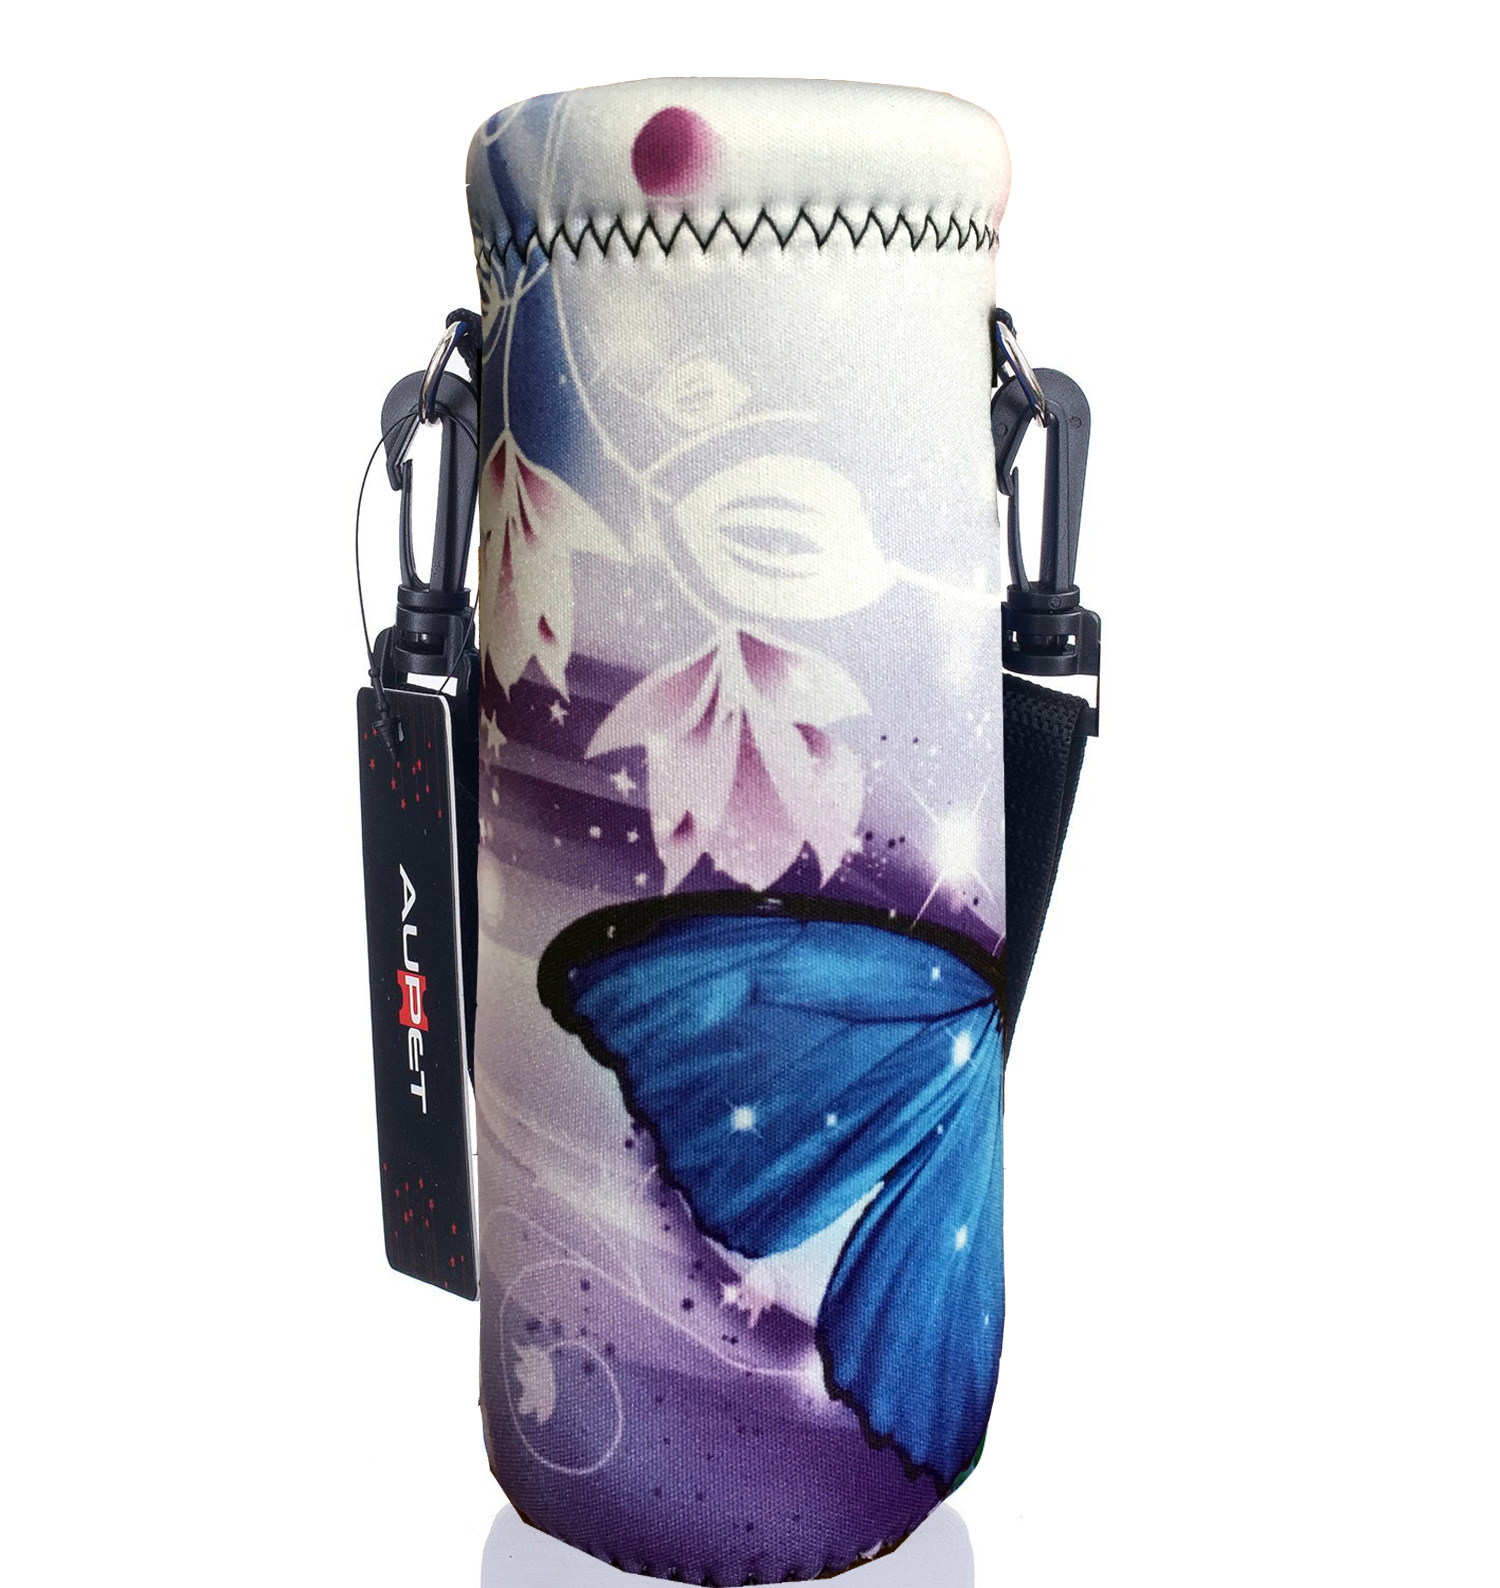 AUPET Water Bottle Carrier,Insulated Neoprene Water bottle Holder Bag Case Pouch Cover 500ML Adjustable Shoulder Strap, Great fo